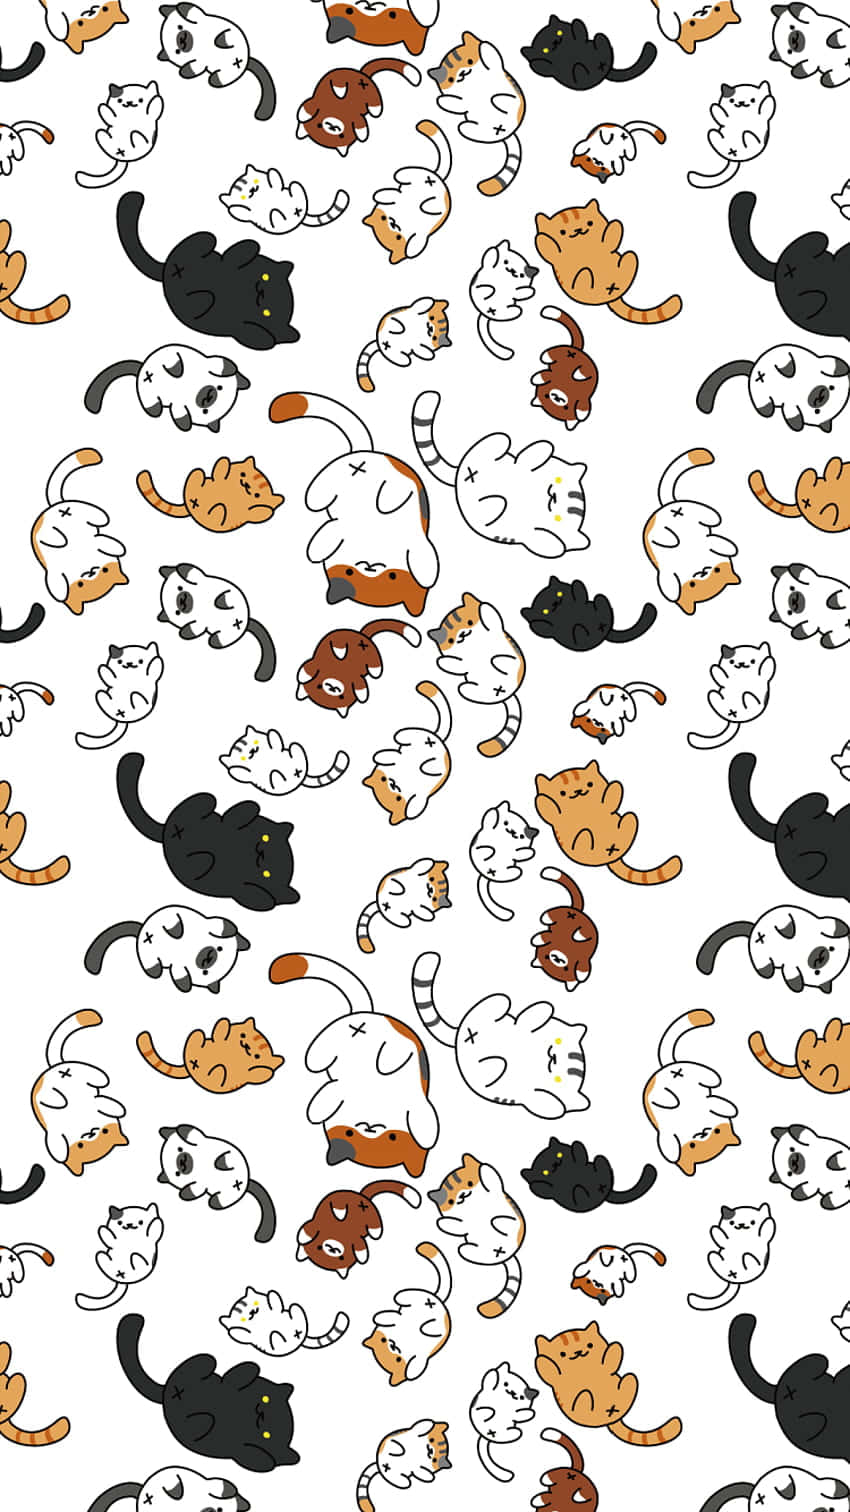 lockscreens & icons  Cute cat wallpaper, Cute emoji wallpaper, Iphone  wallpaper cat